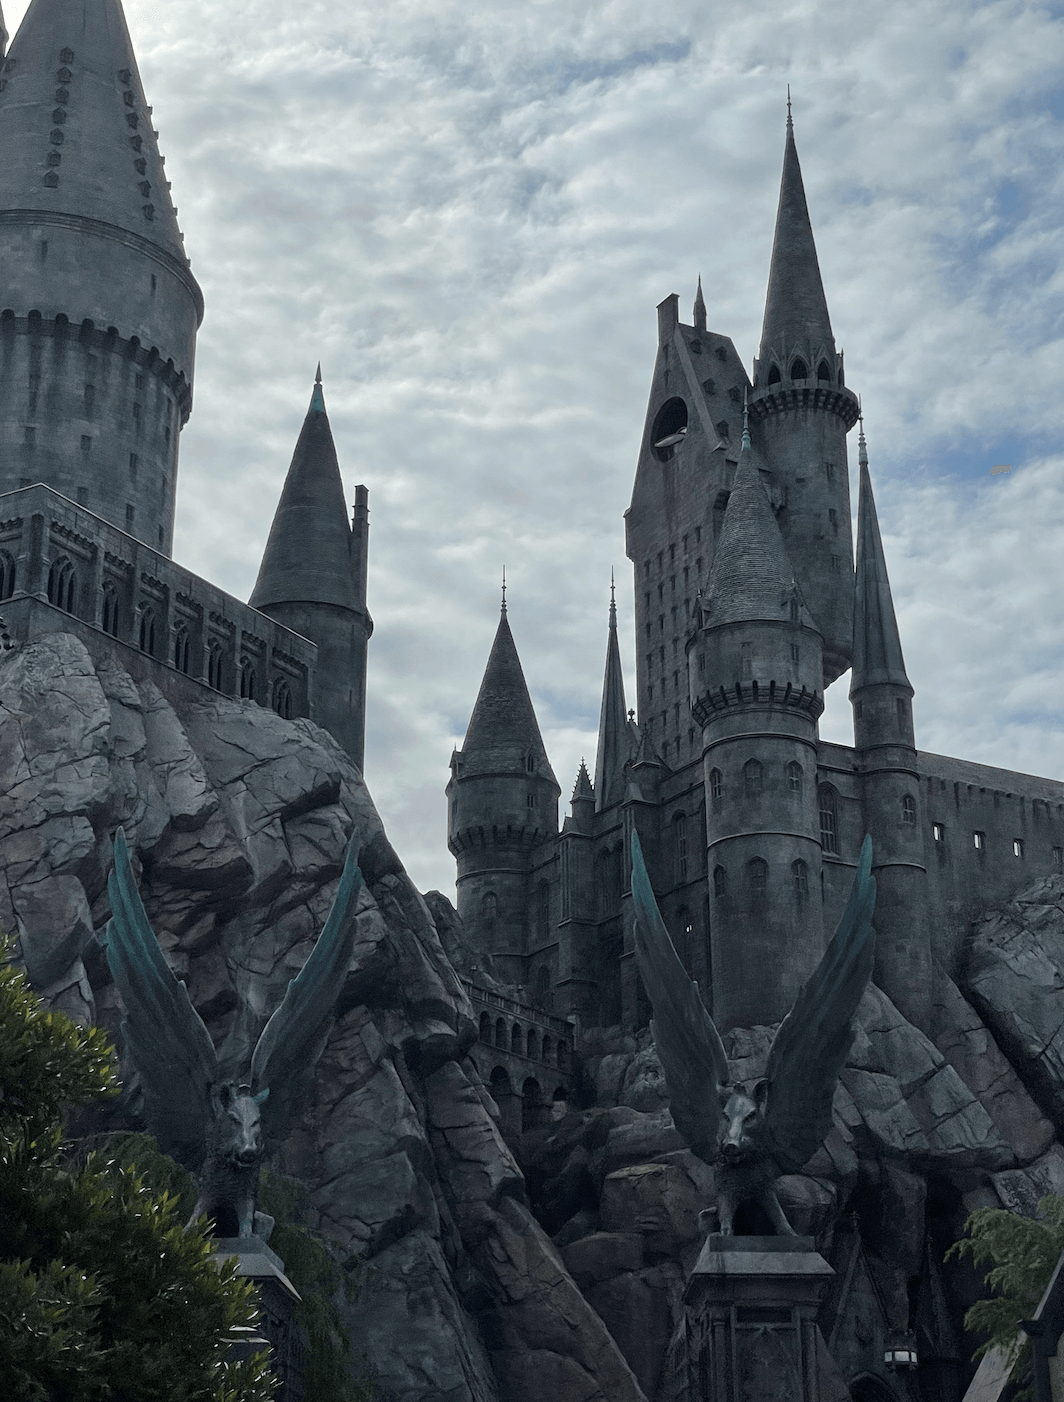 好萊塢環球影城Universal Studios Hollywood 
哈利波特 Harry Potter